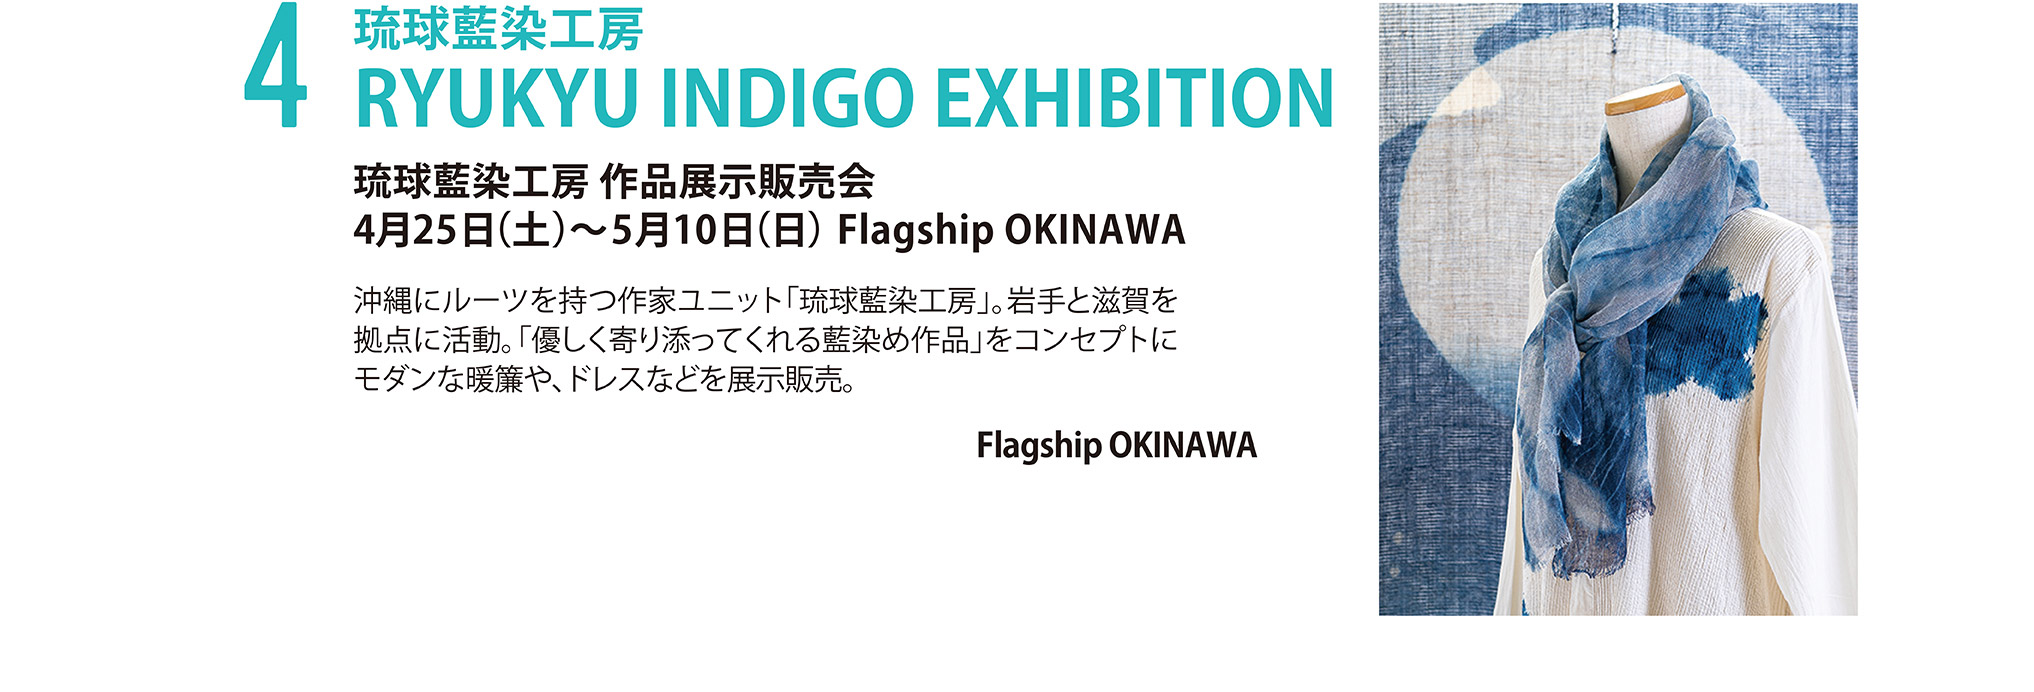 RYUKYU INDIGO EXHIBITION 4/25-5/10 琉球藍染工房 作品展示販売会